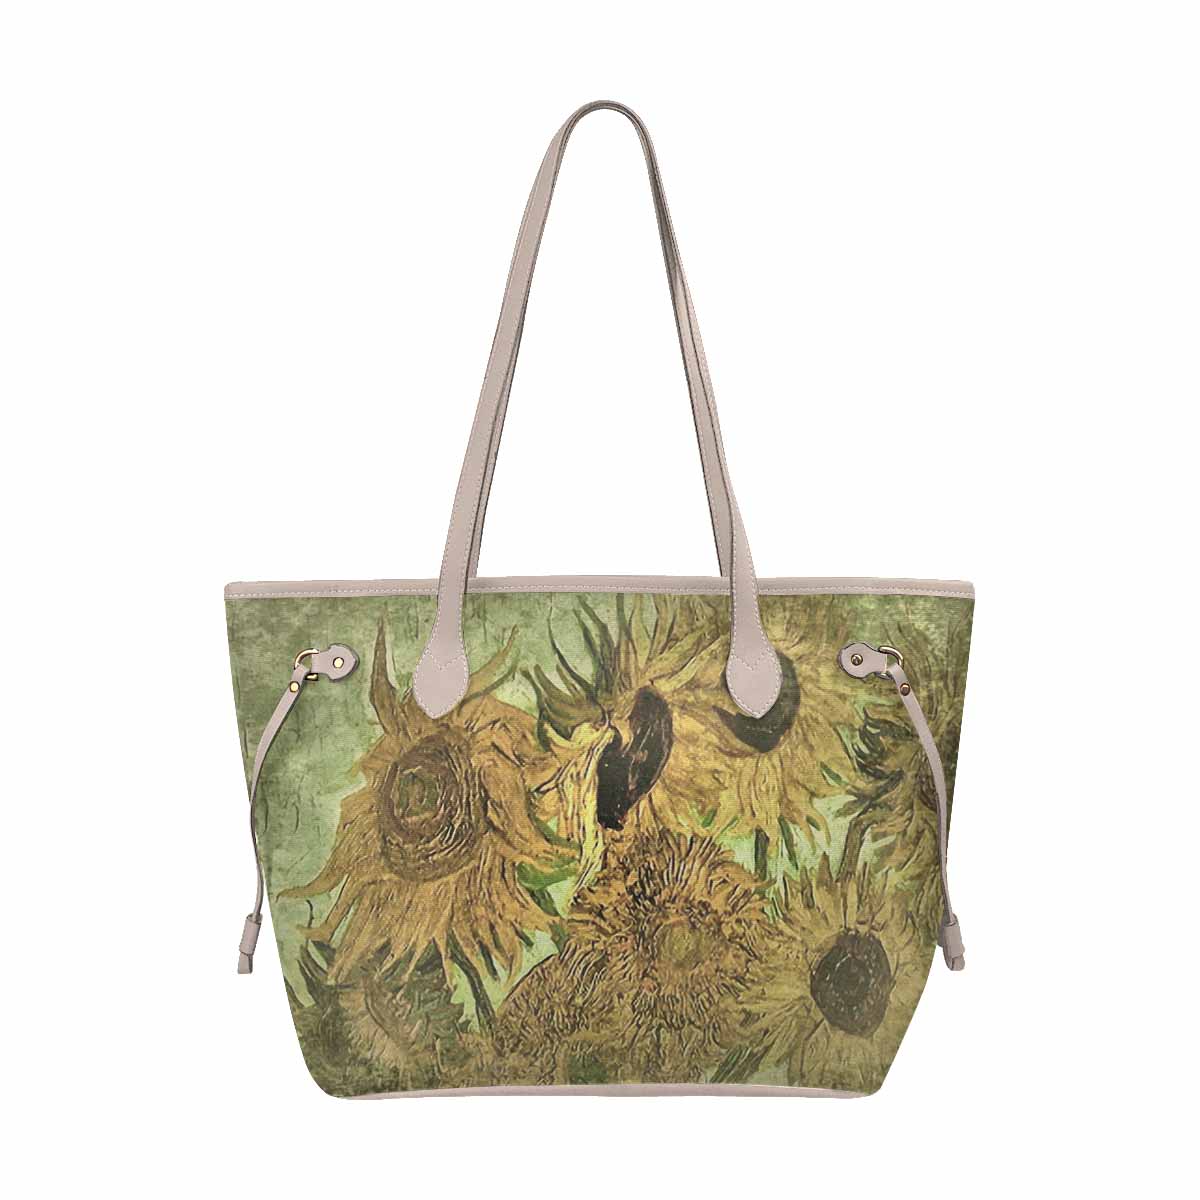 Vintage Floral Handbag, Classic Handbag, Mod 1695361, Design 48x BEIGE/TAN TRIM